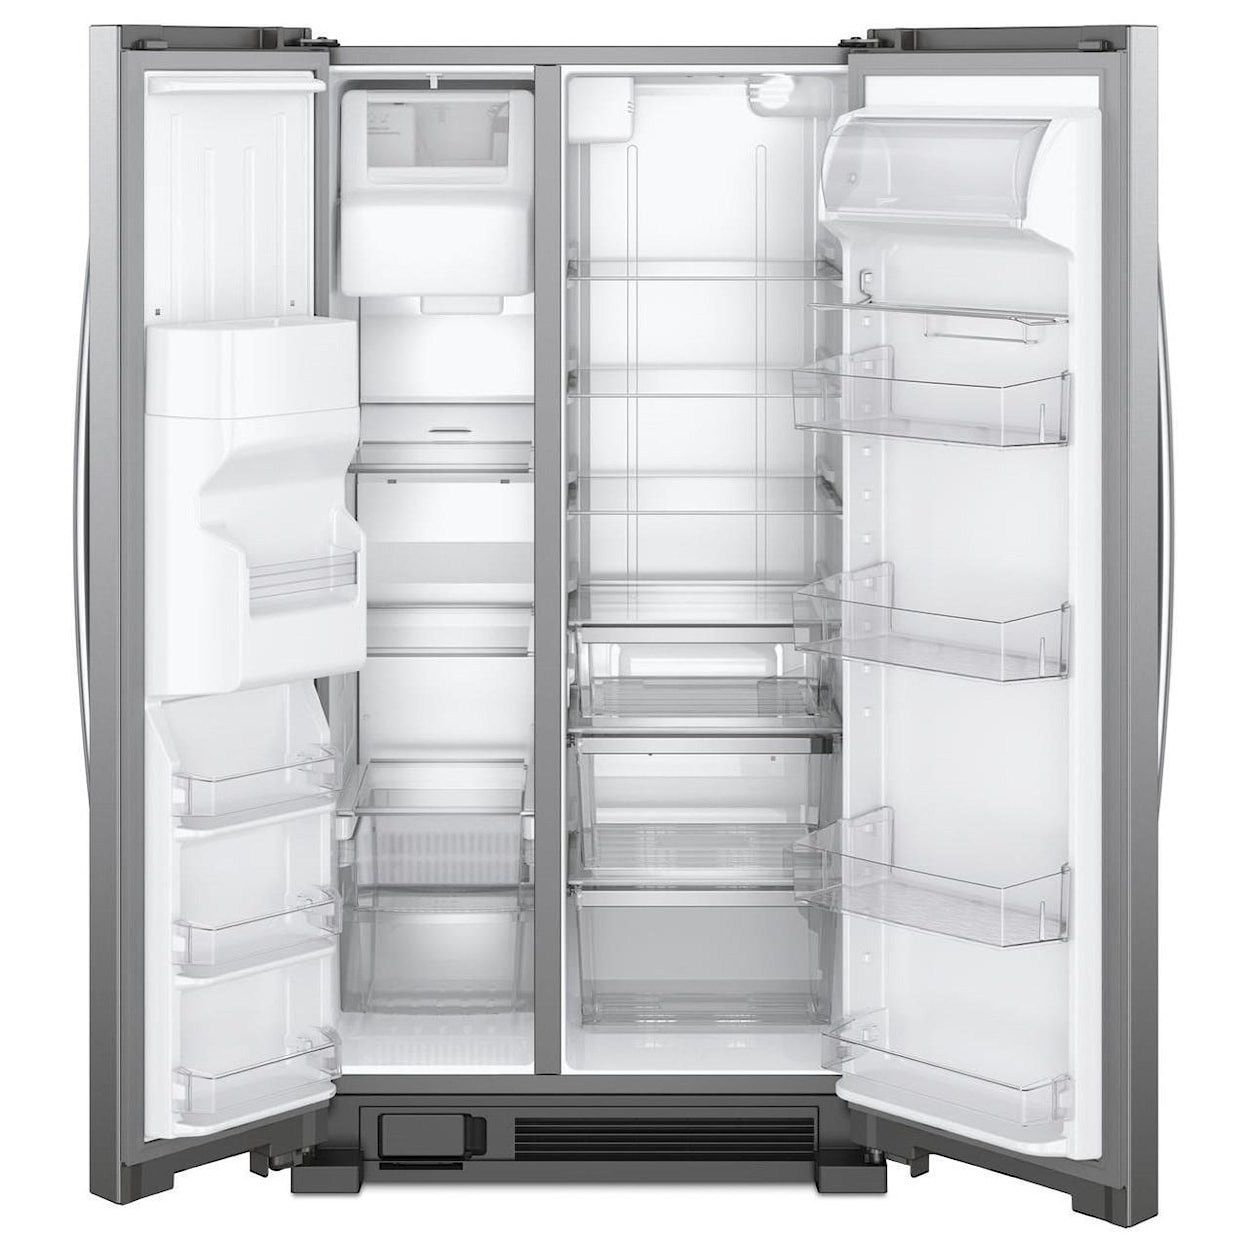 Whirlpool Side-By-Side Refrigerators 21 Cu. Ft. 33" Side-by-Side Refrigerator